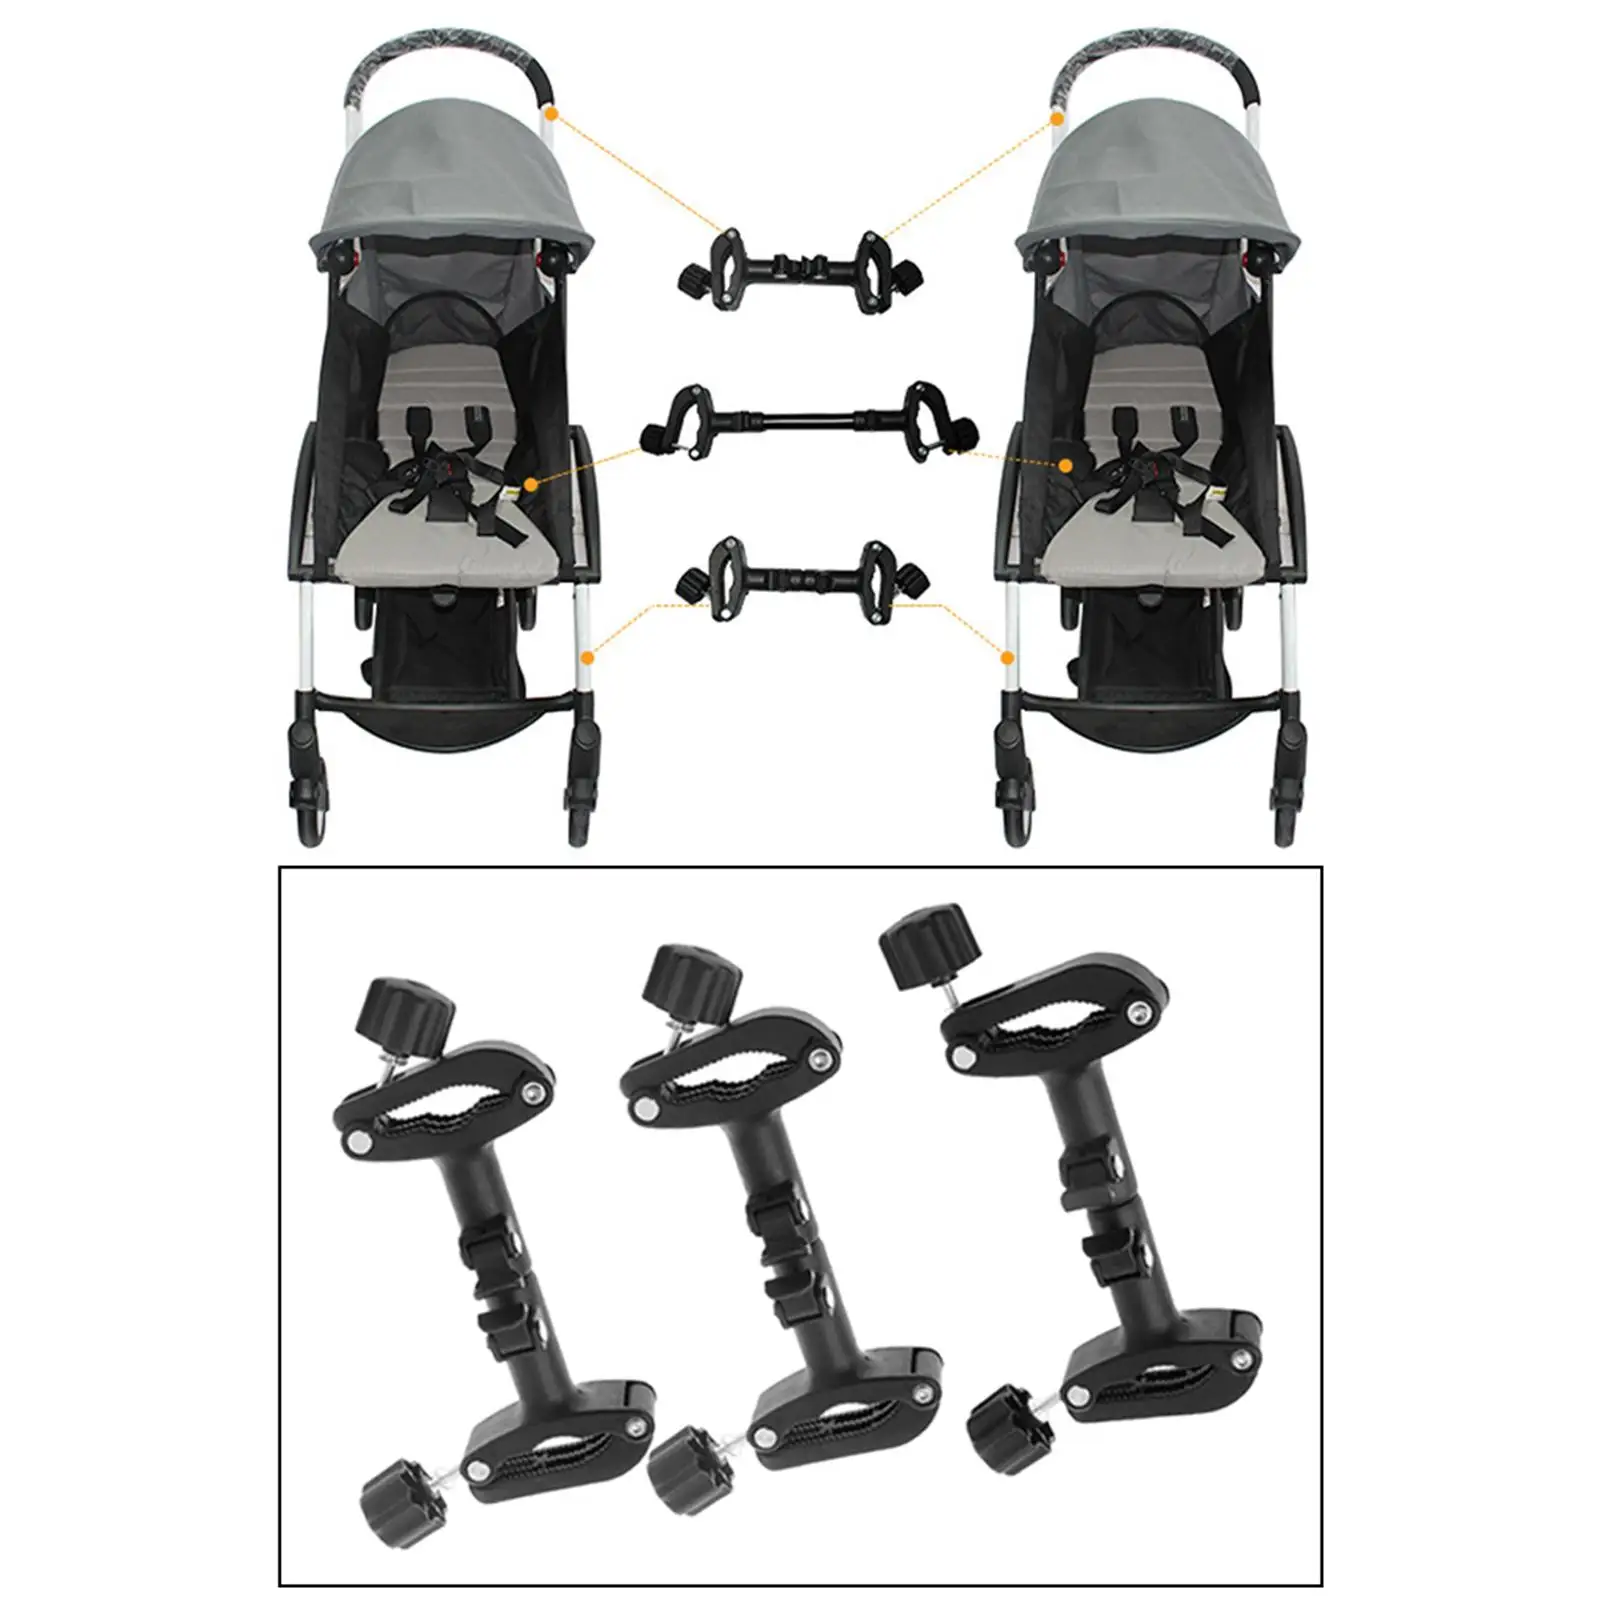 3x Baby Stroller Accessories Pushchairs Pram Part for Infant Child Kids